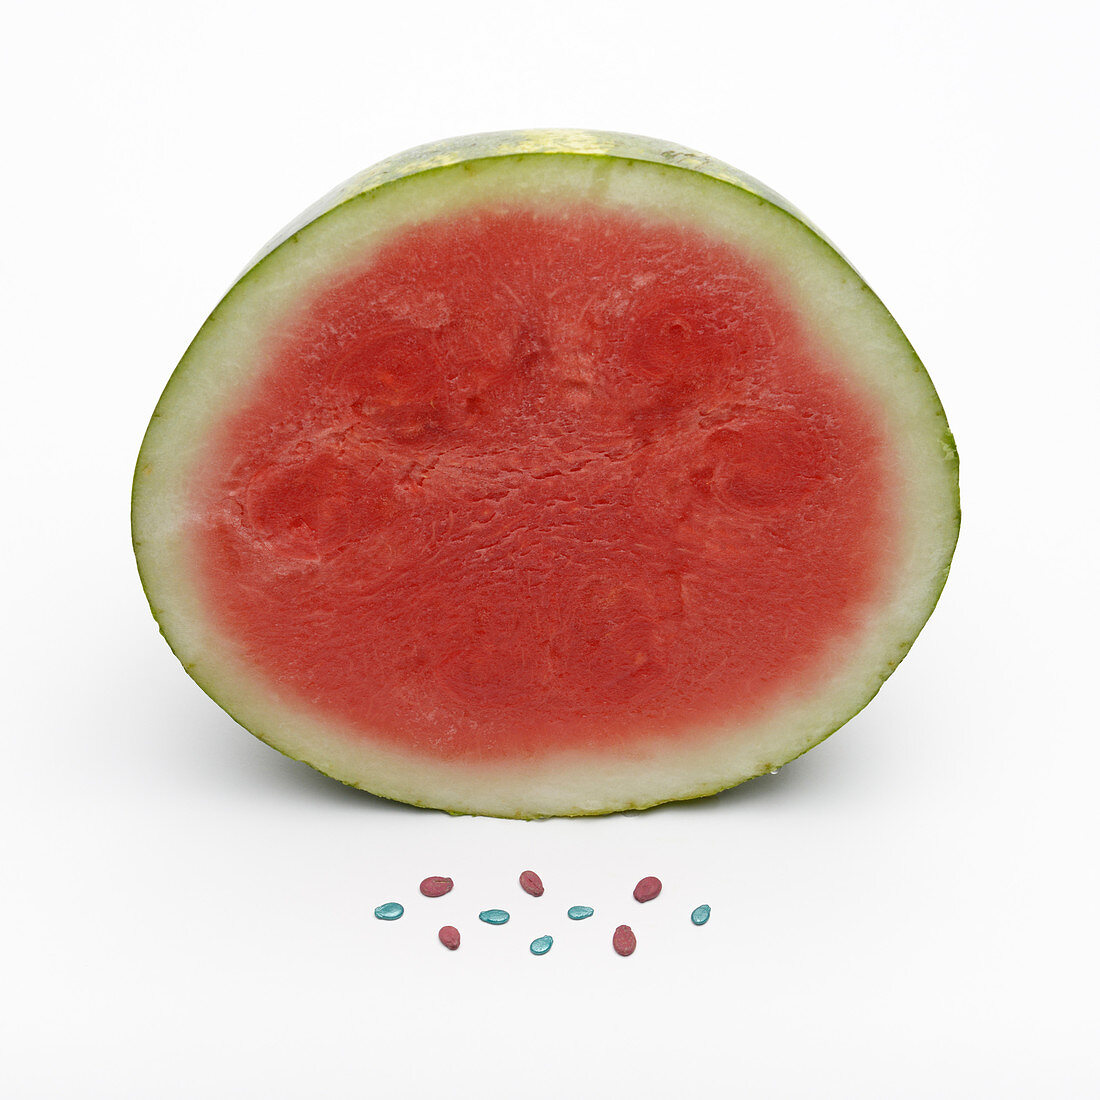 Seedless watermelon genetics